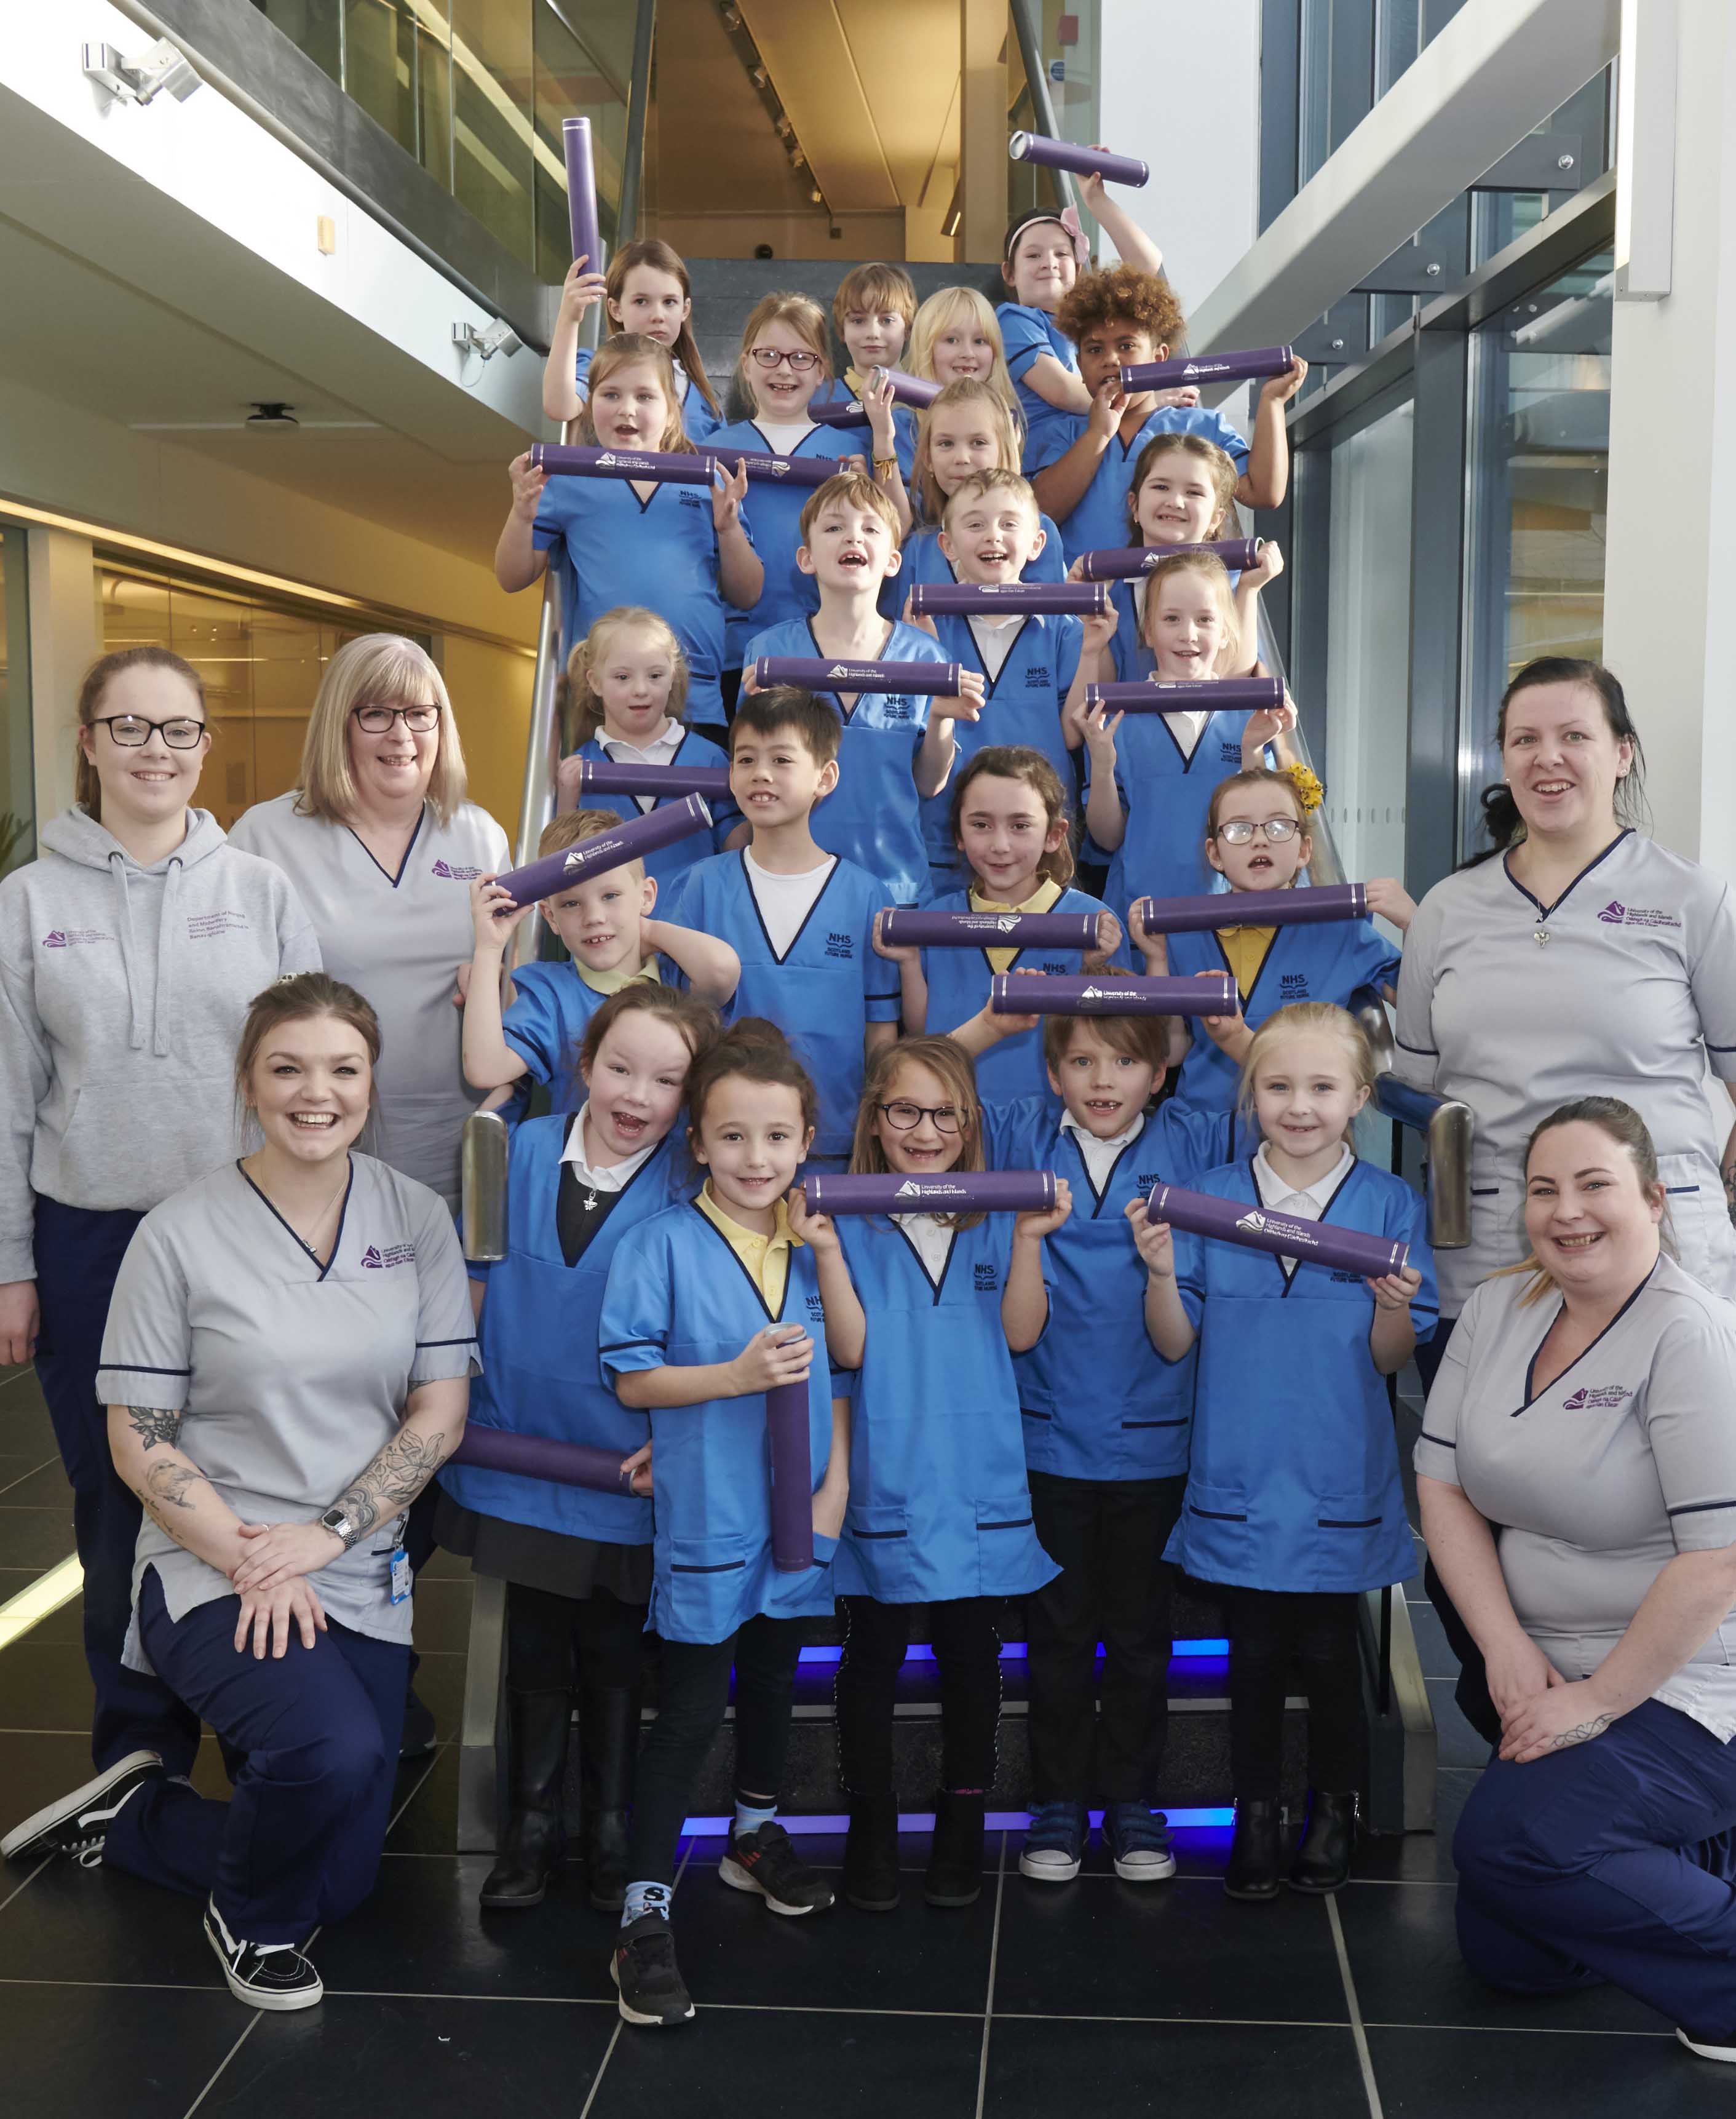 Primary pupils get glimpse into nursing careers